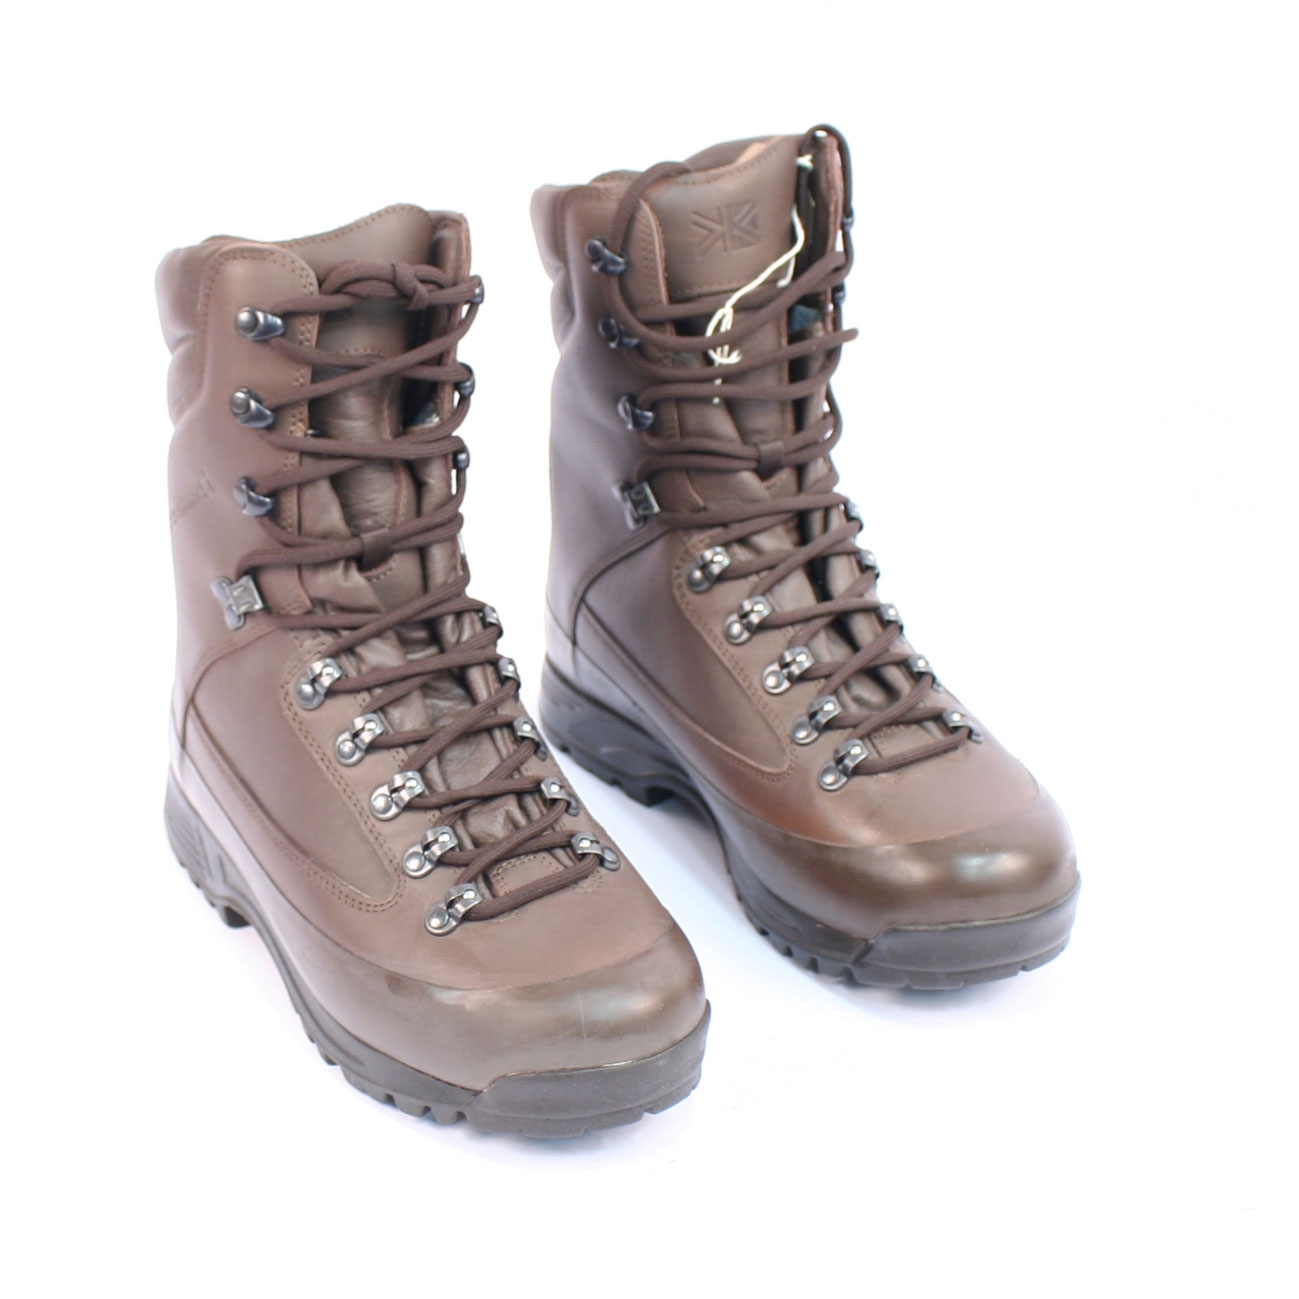 karrimor military boots